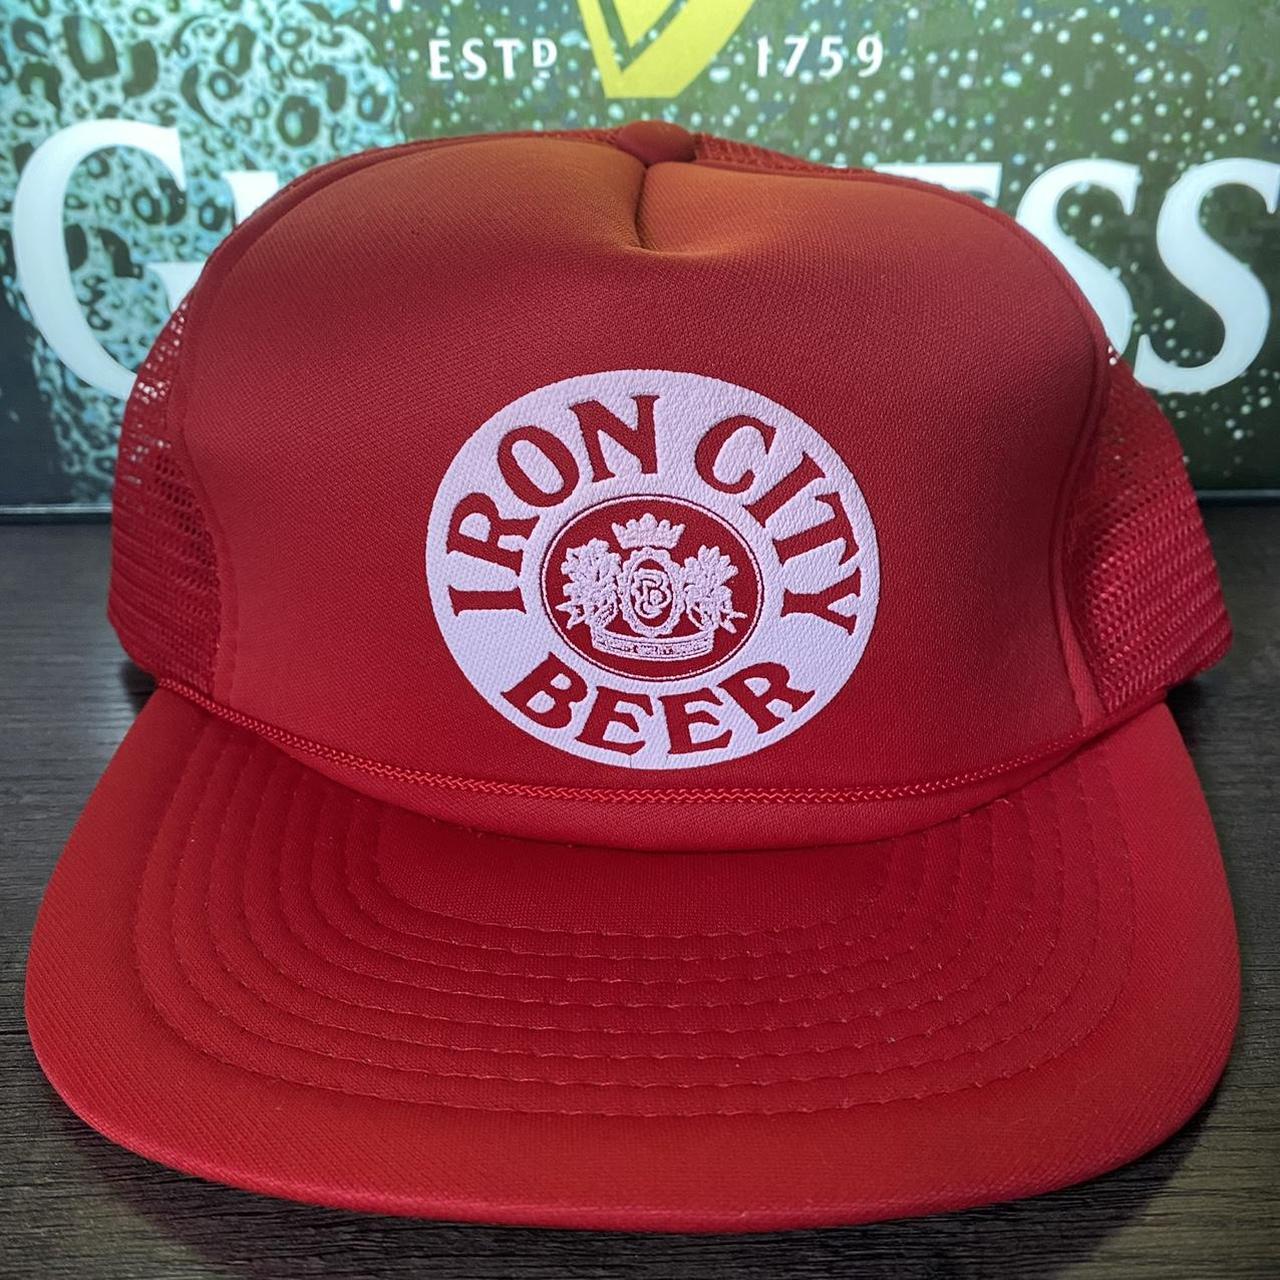 Product Image 1 - Iron city beer trucker hat